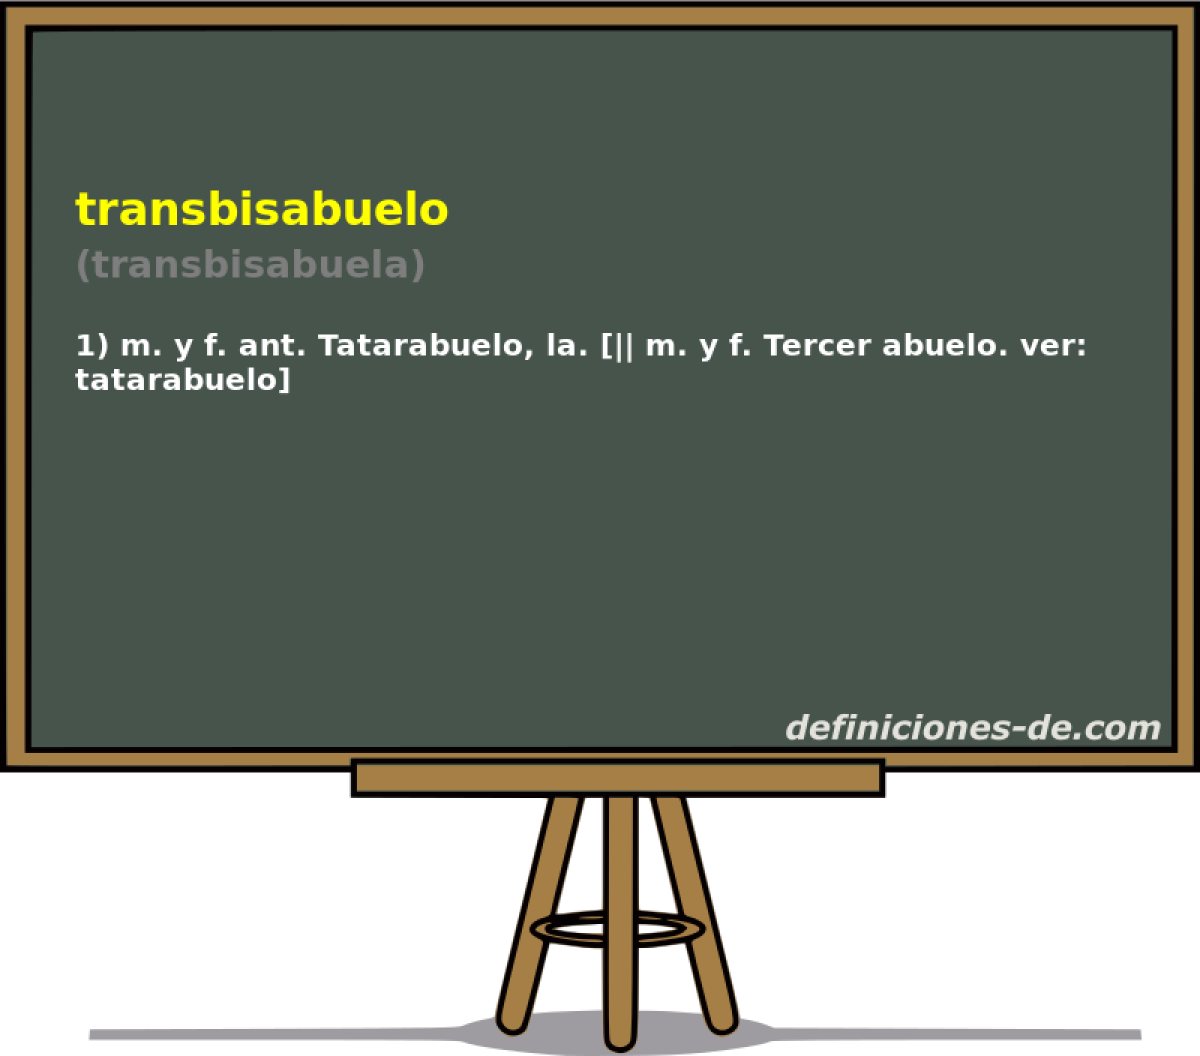 transbisabuelo (transbisabuela)